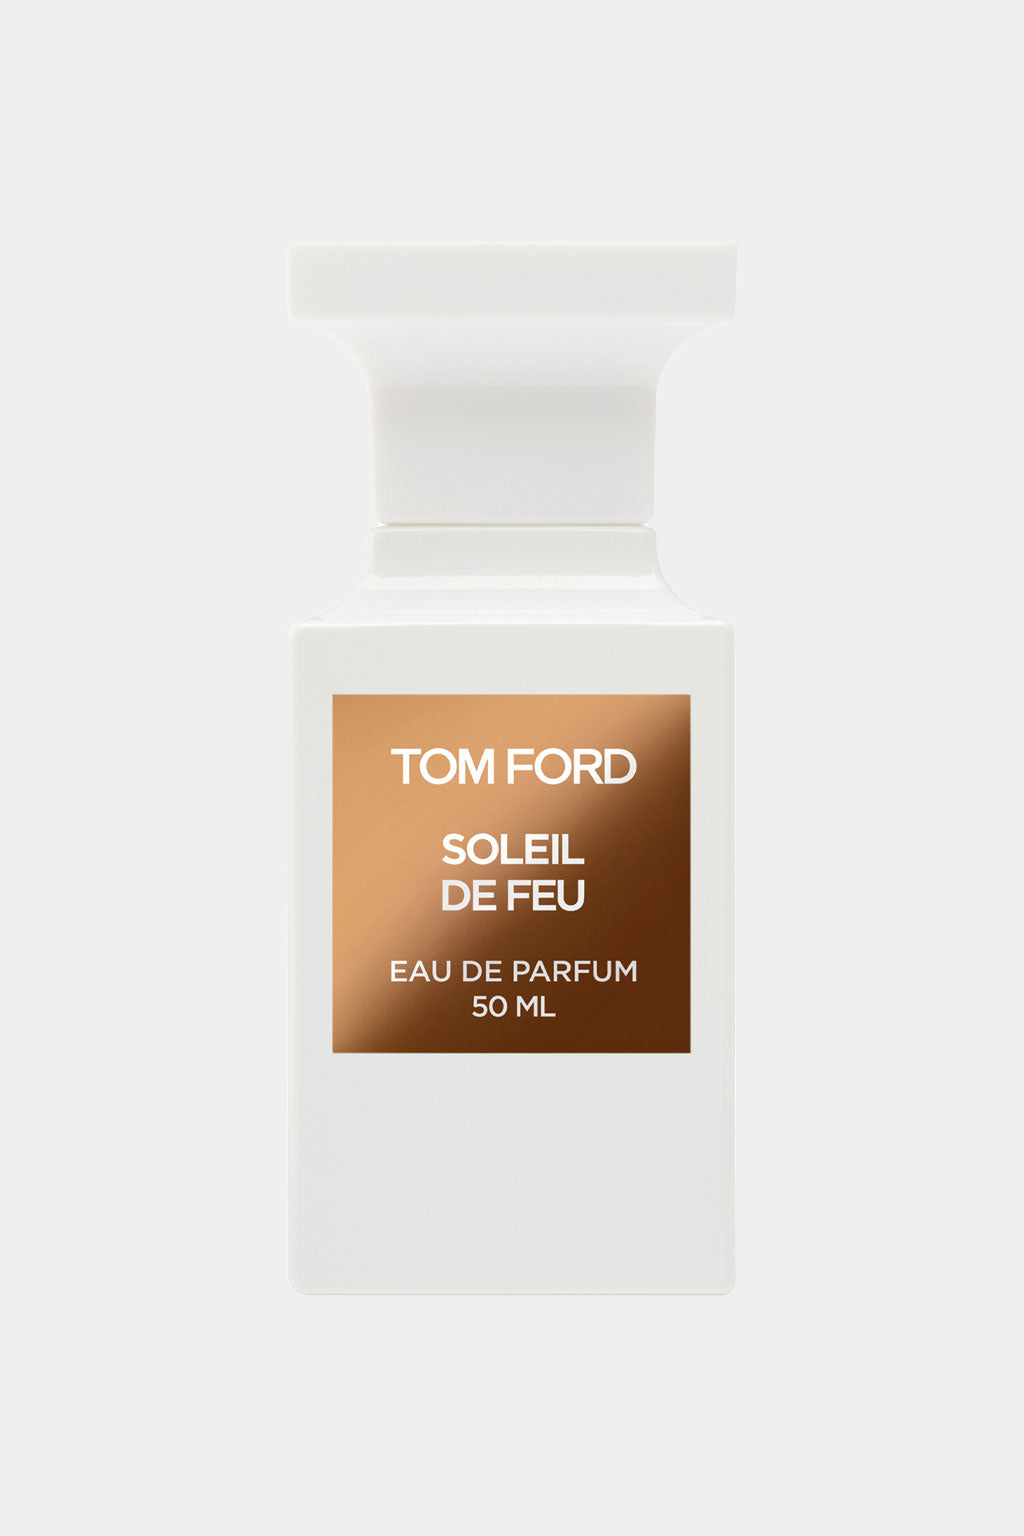 Tom Ford - Soleil de Feu Eau de Parfum